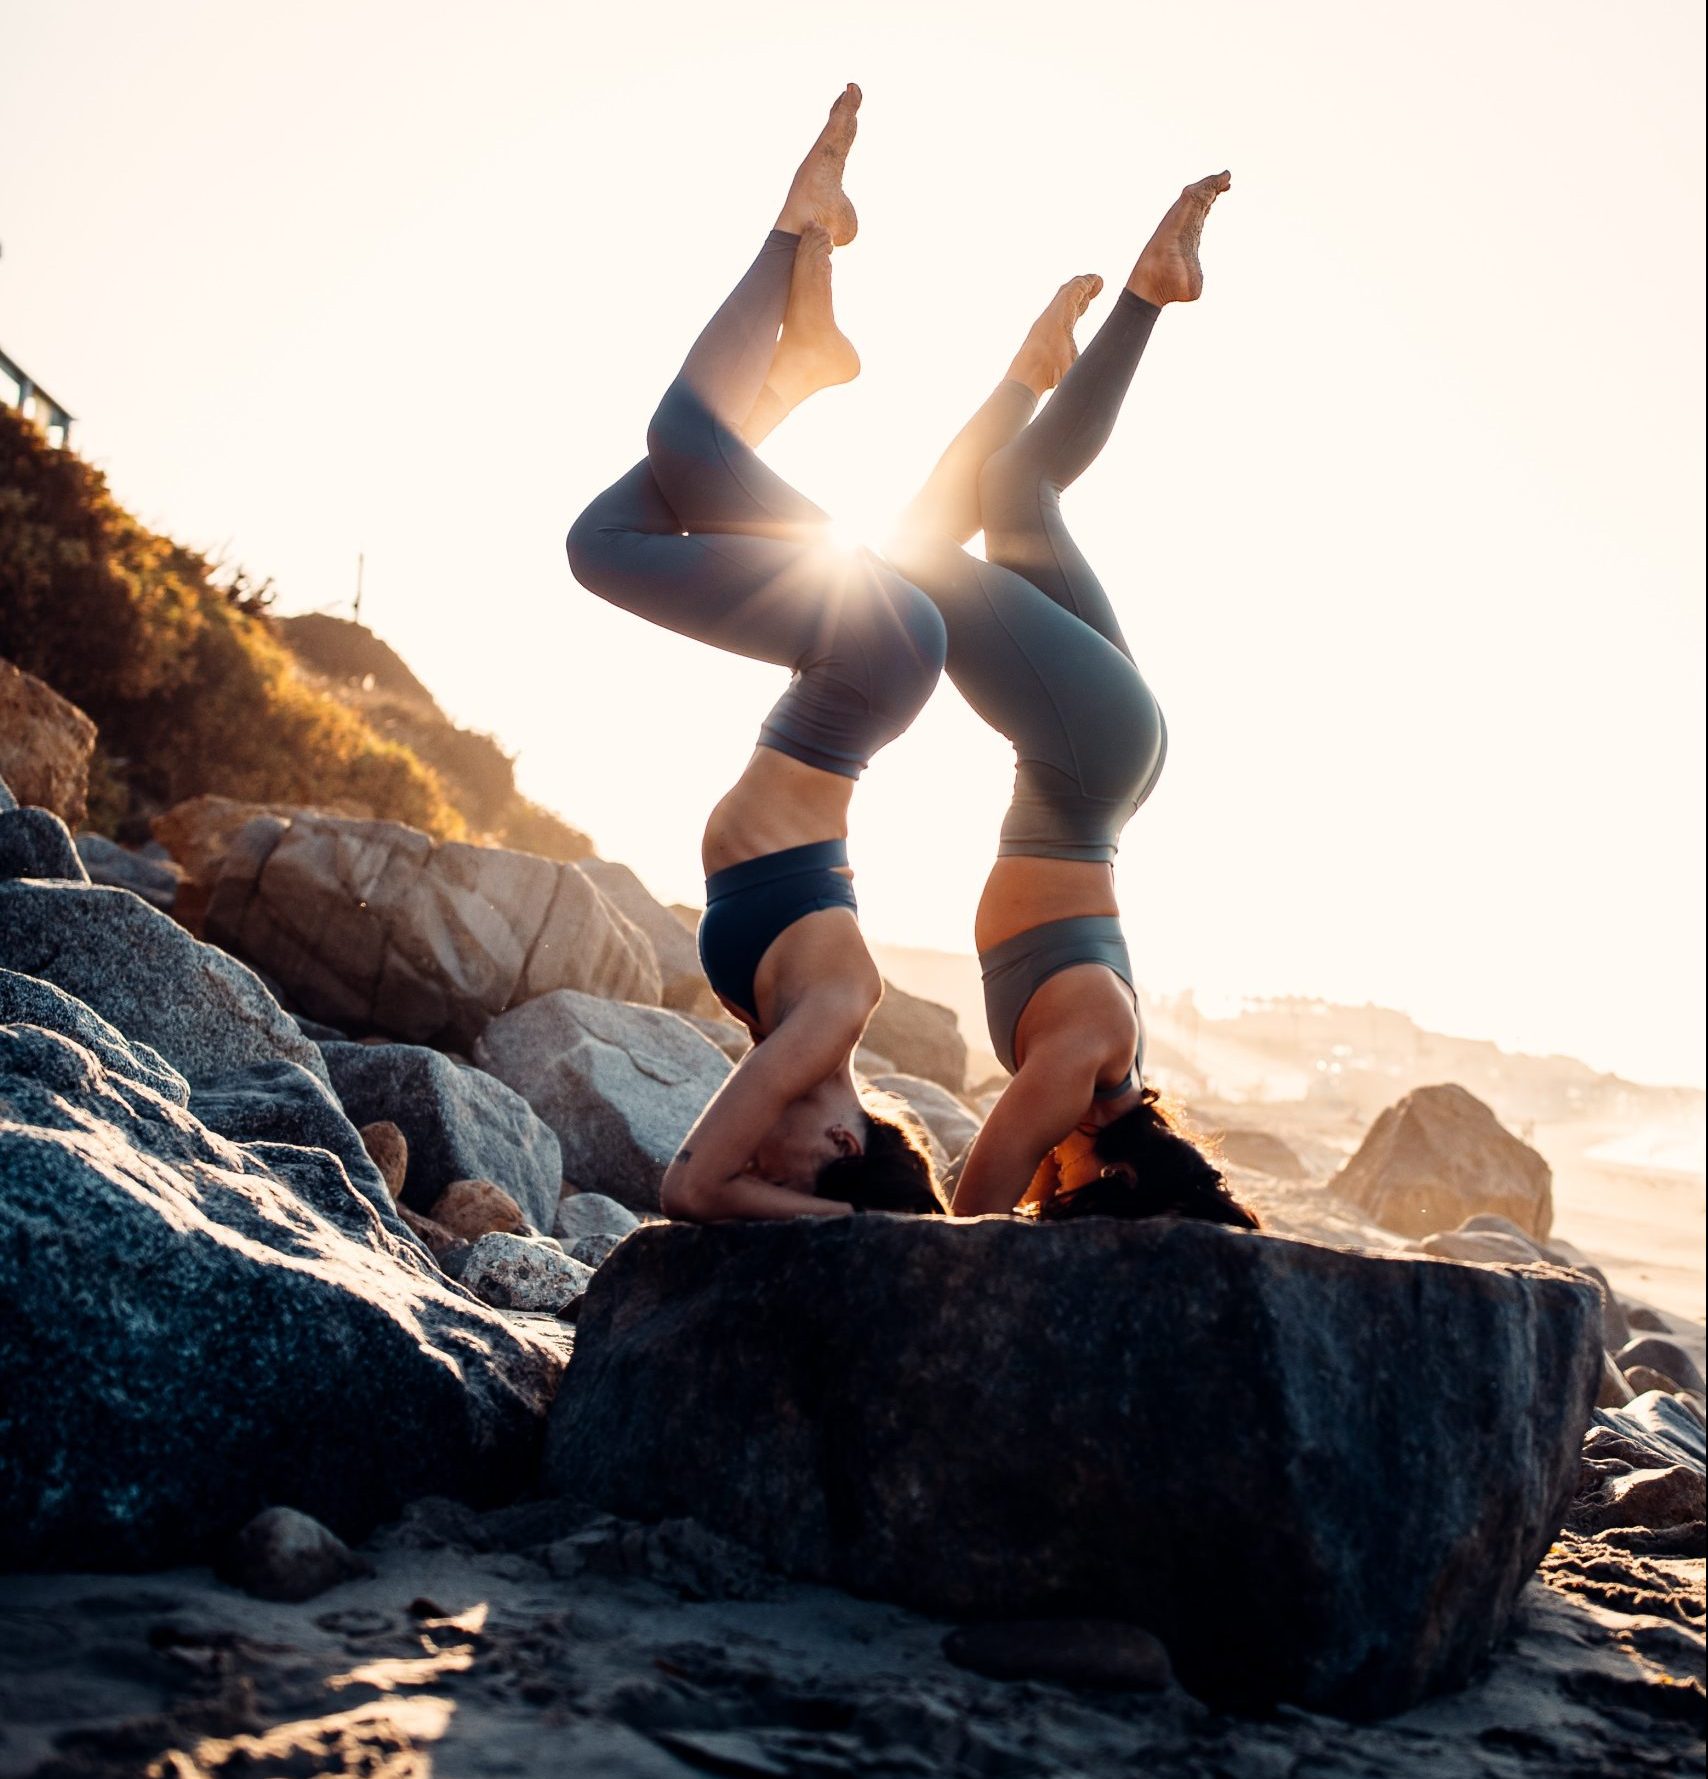 Photo by Nick Wehrli: https://www.pexels.com/photo/women-doing-acro-yoga-together-5345858/